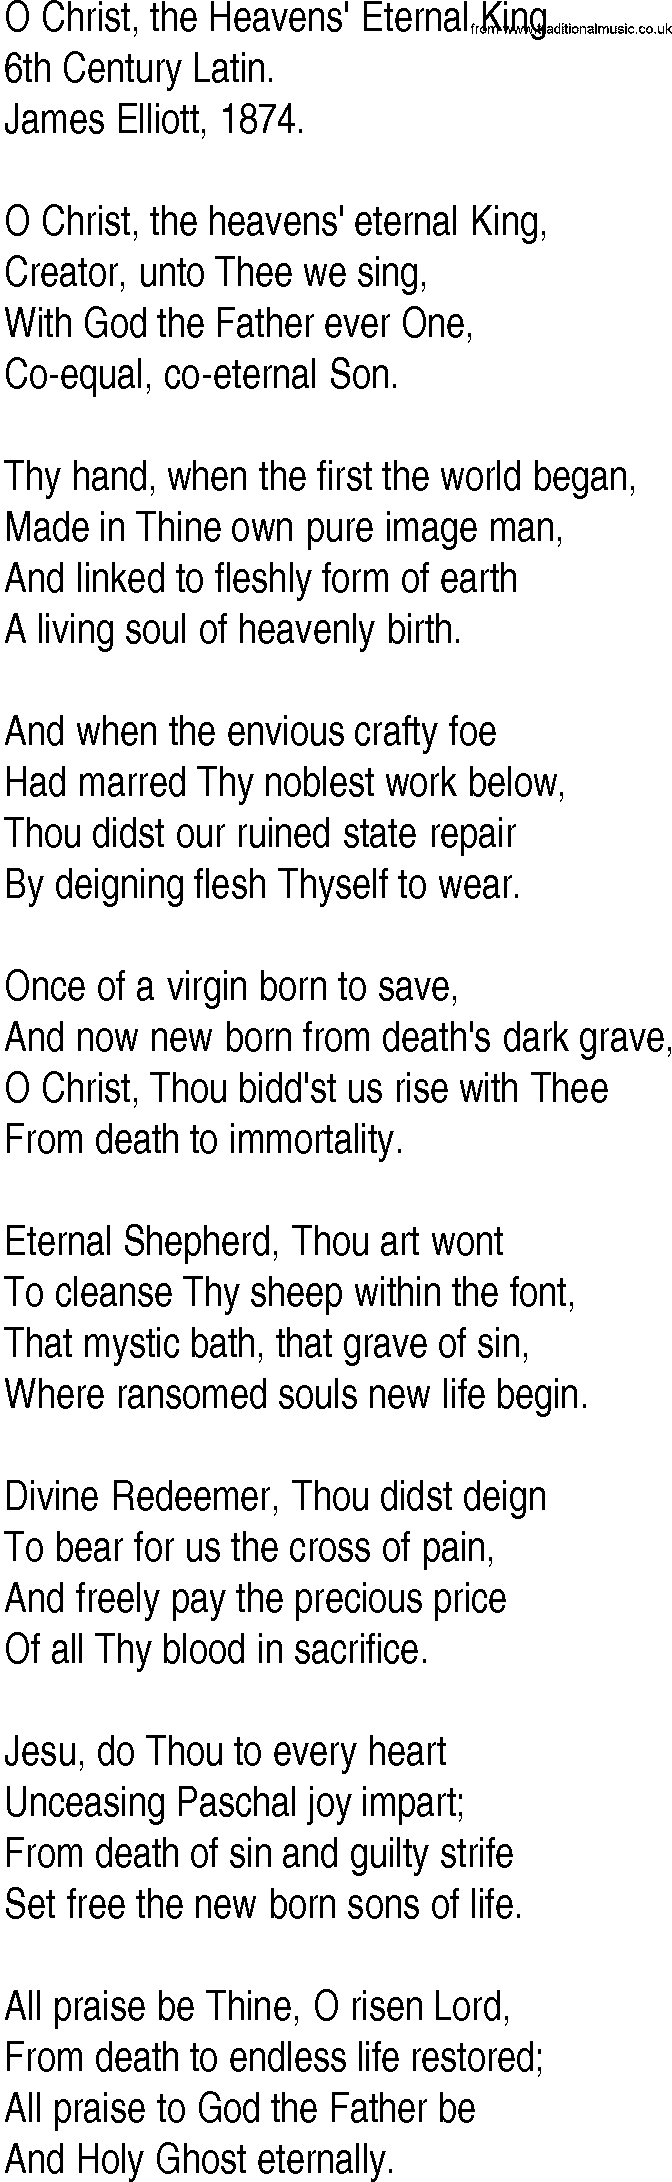 Hymn and Gospel Song: O Christ, the Heavens' Eternal King by th Century Latin lyrics